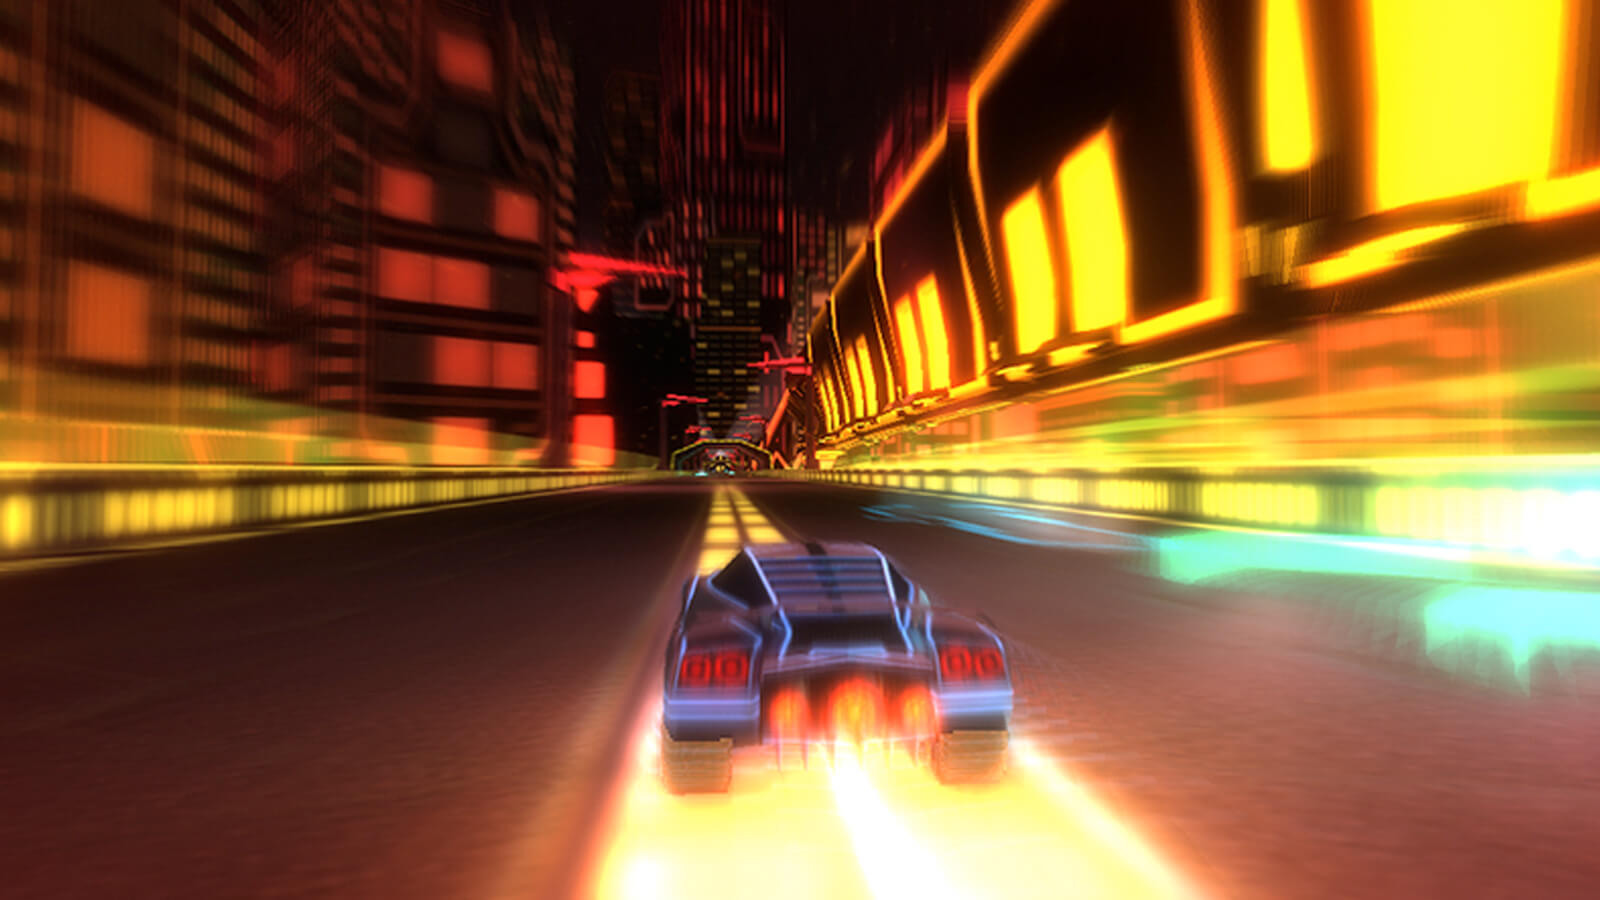 A car speeds through a glowing, futuristic cityscape.